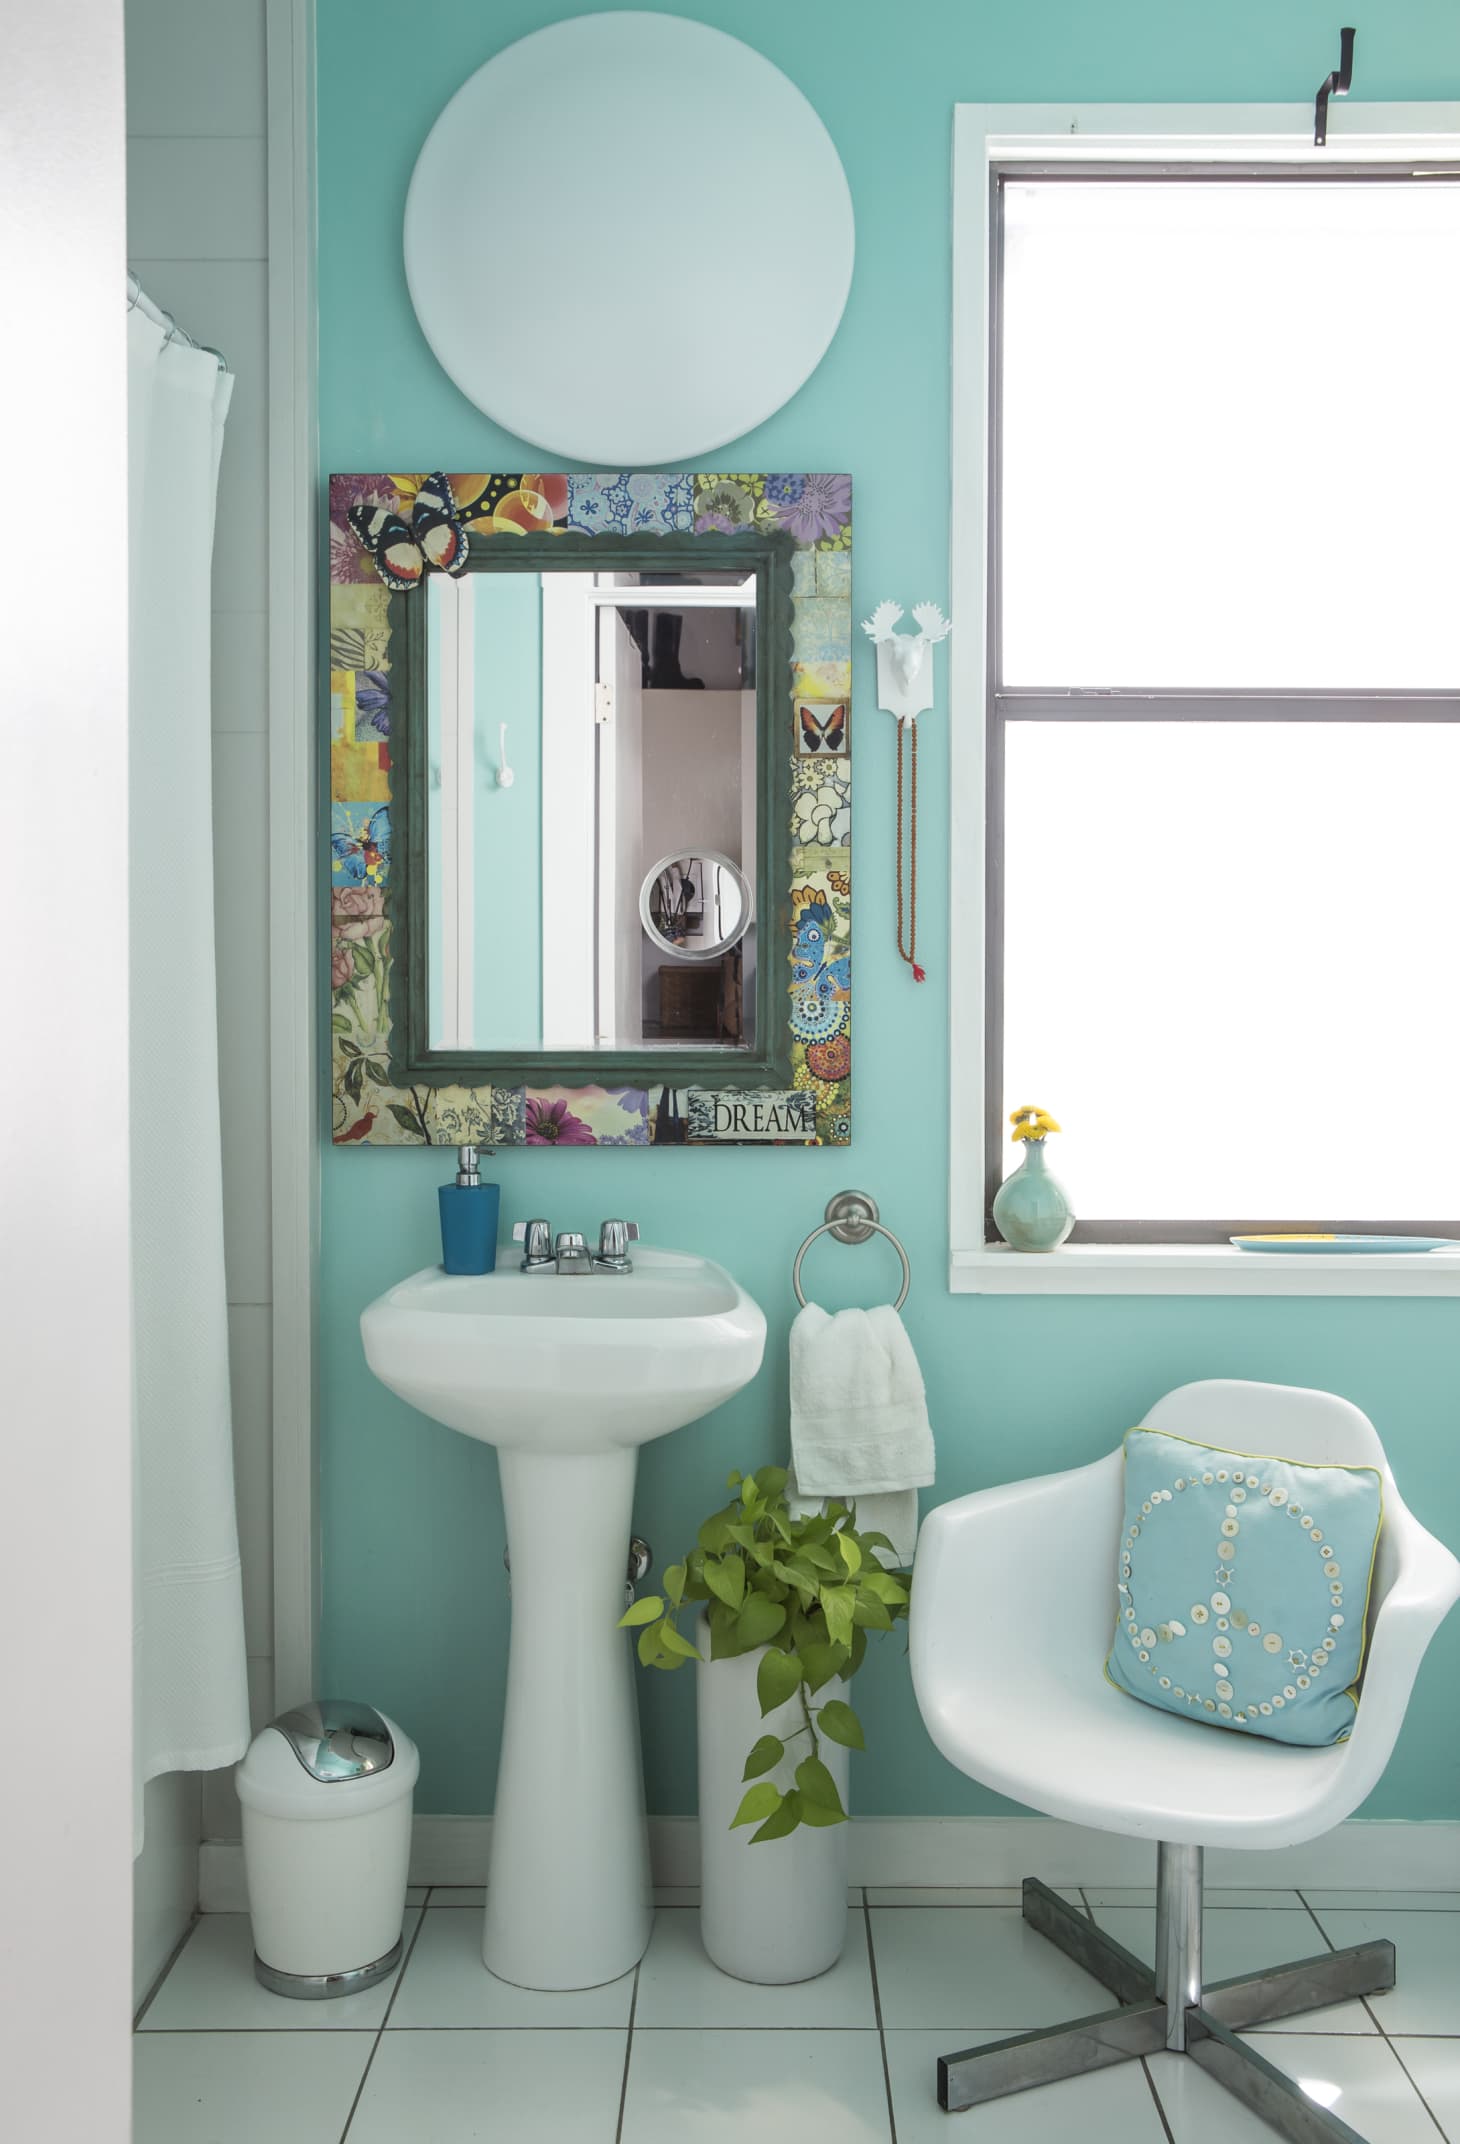 50 Best Small Bathroom Decorating Ideas - Tiny Bathroom Layout & Decor ...